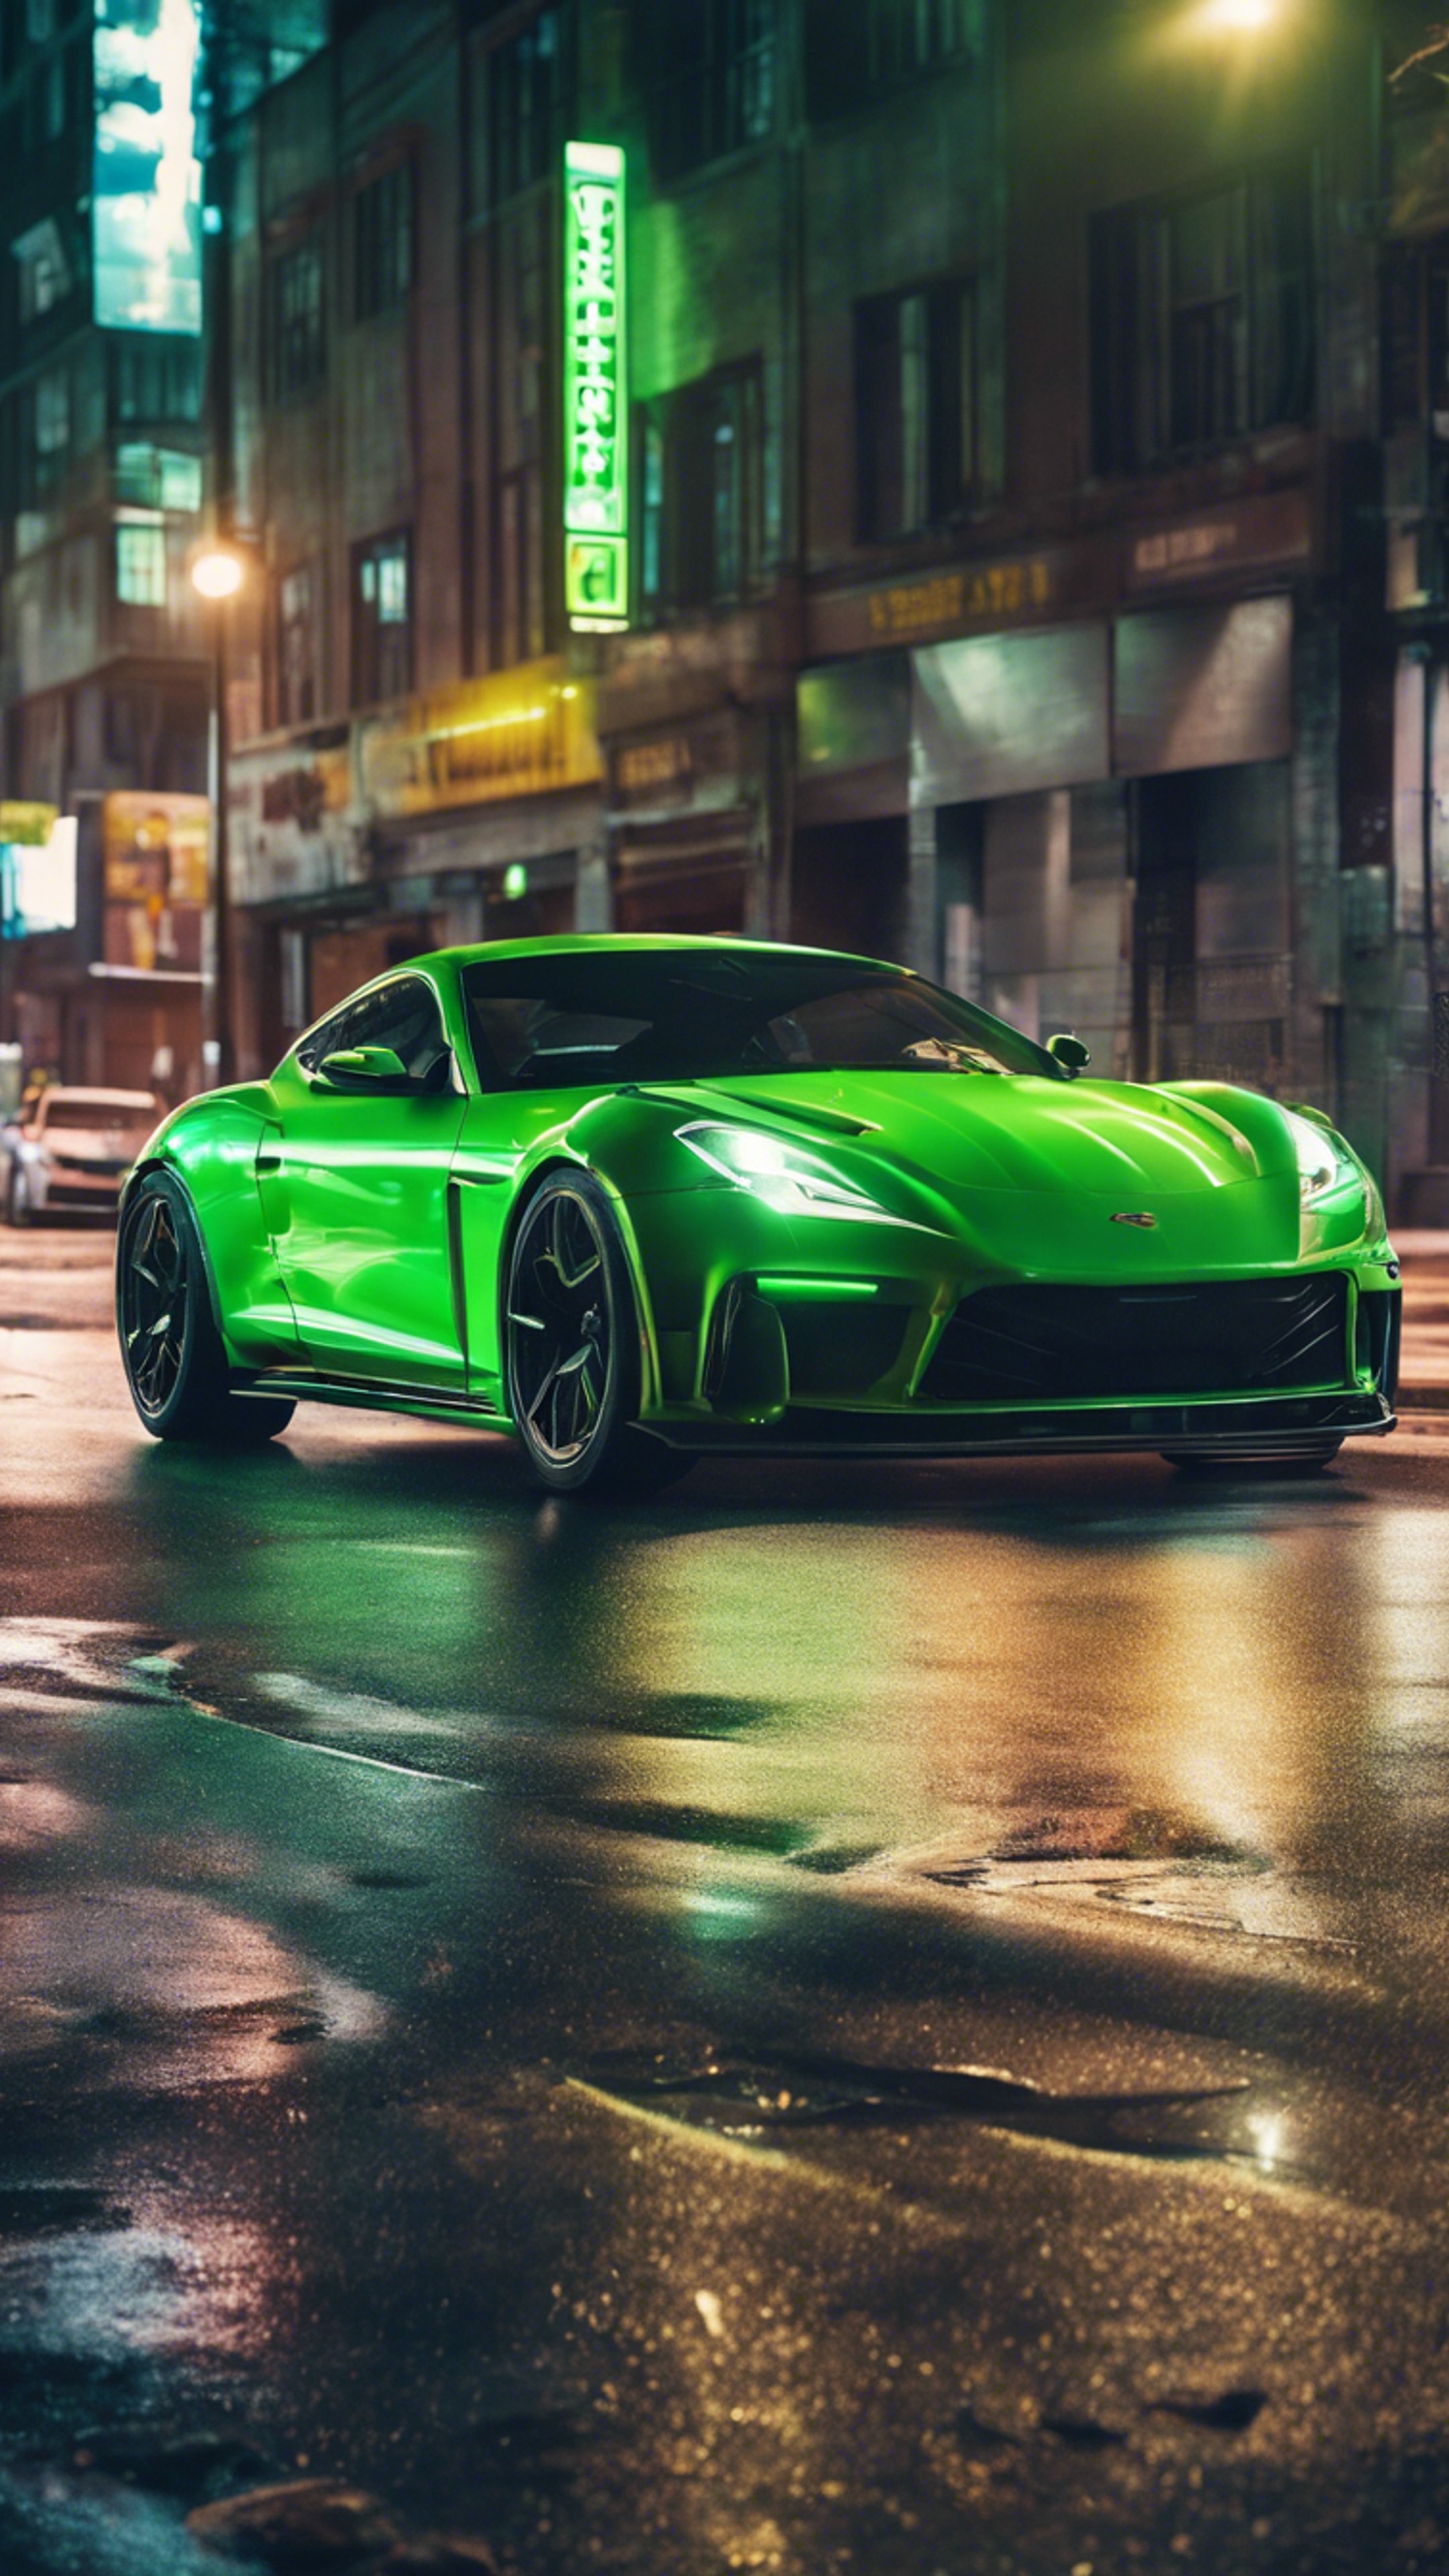 A cool neon green sports car racing down a city street at night.壁紙[ff2aa681813144c0b5f6]